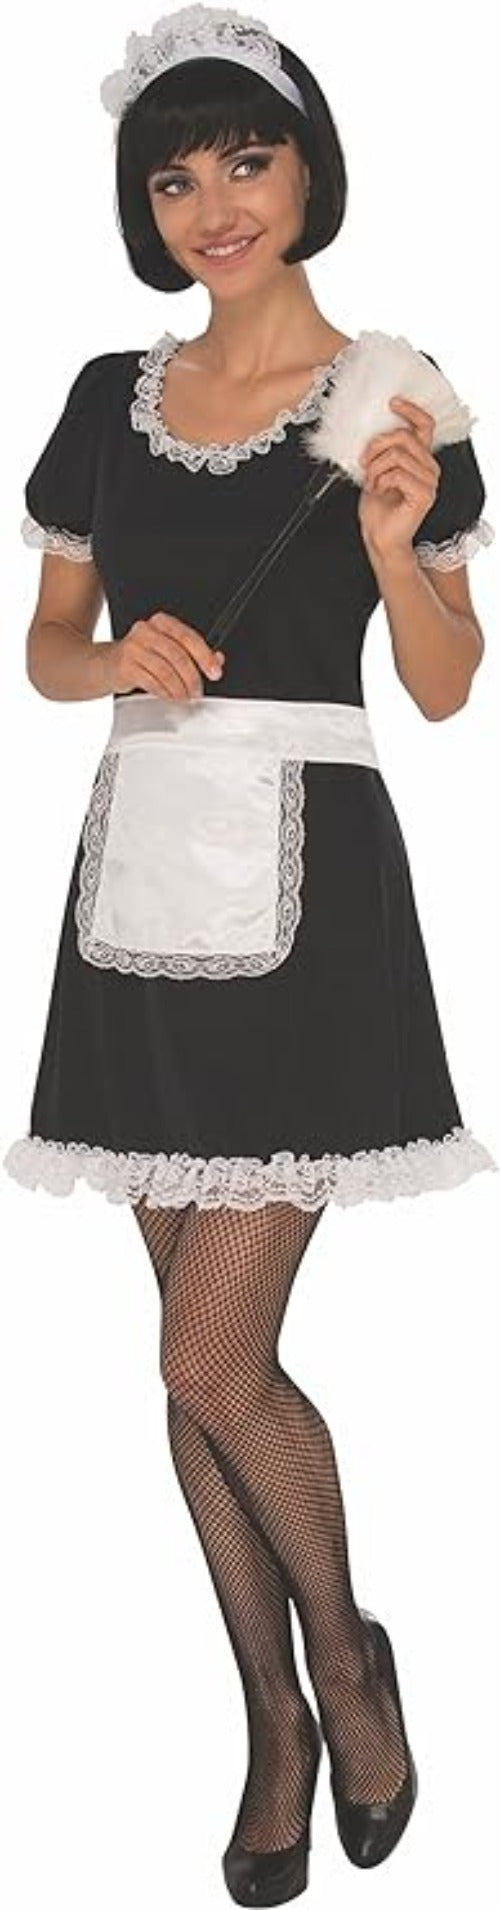 Saucy Maid - Adult Costume